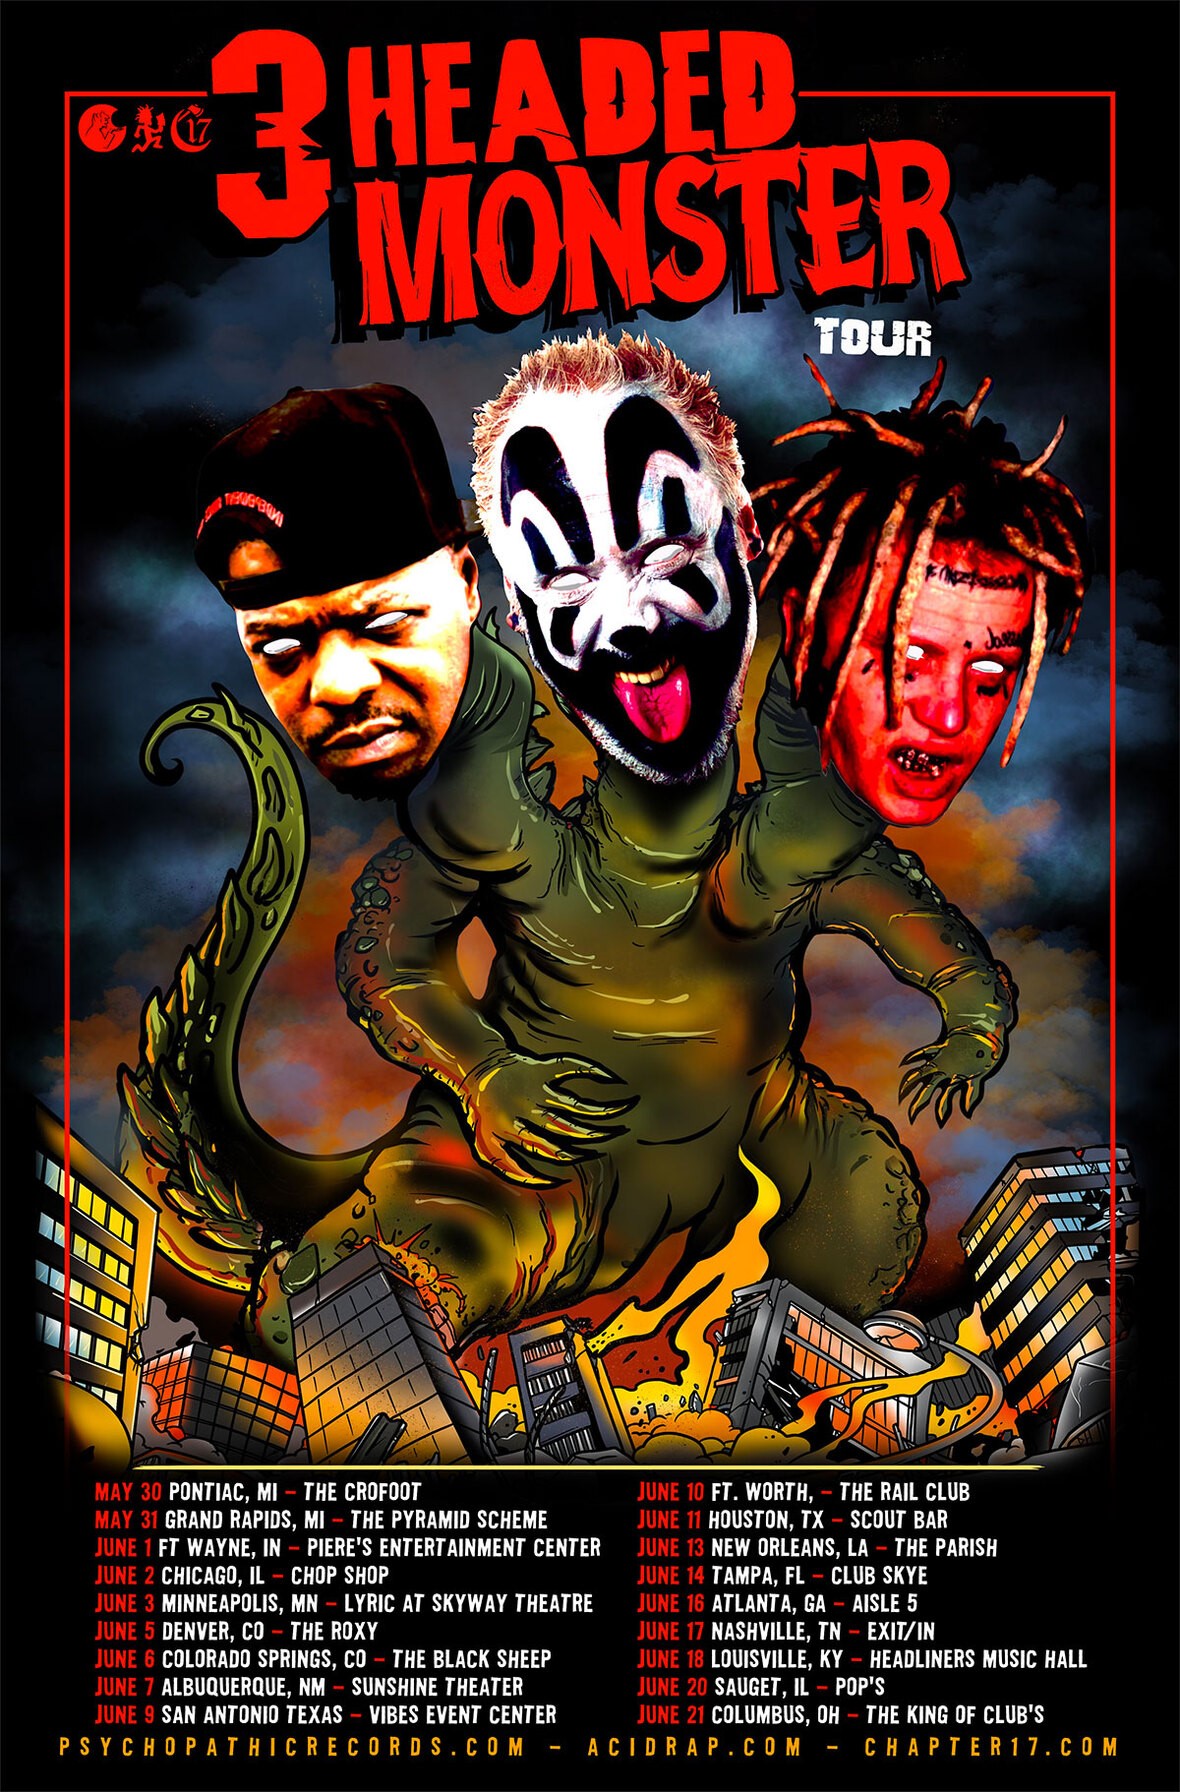 3 headed monster tour dates